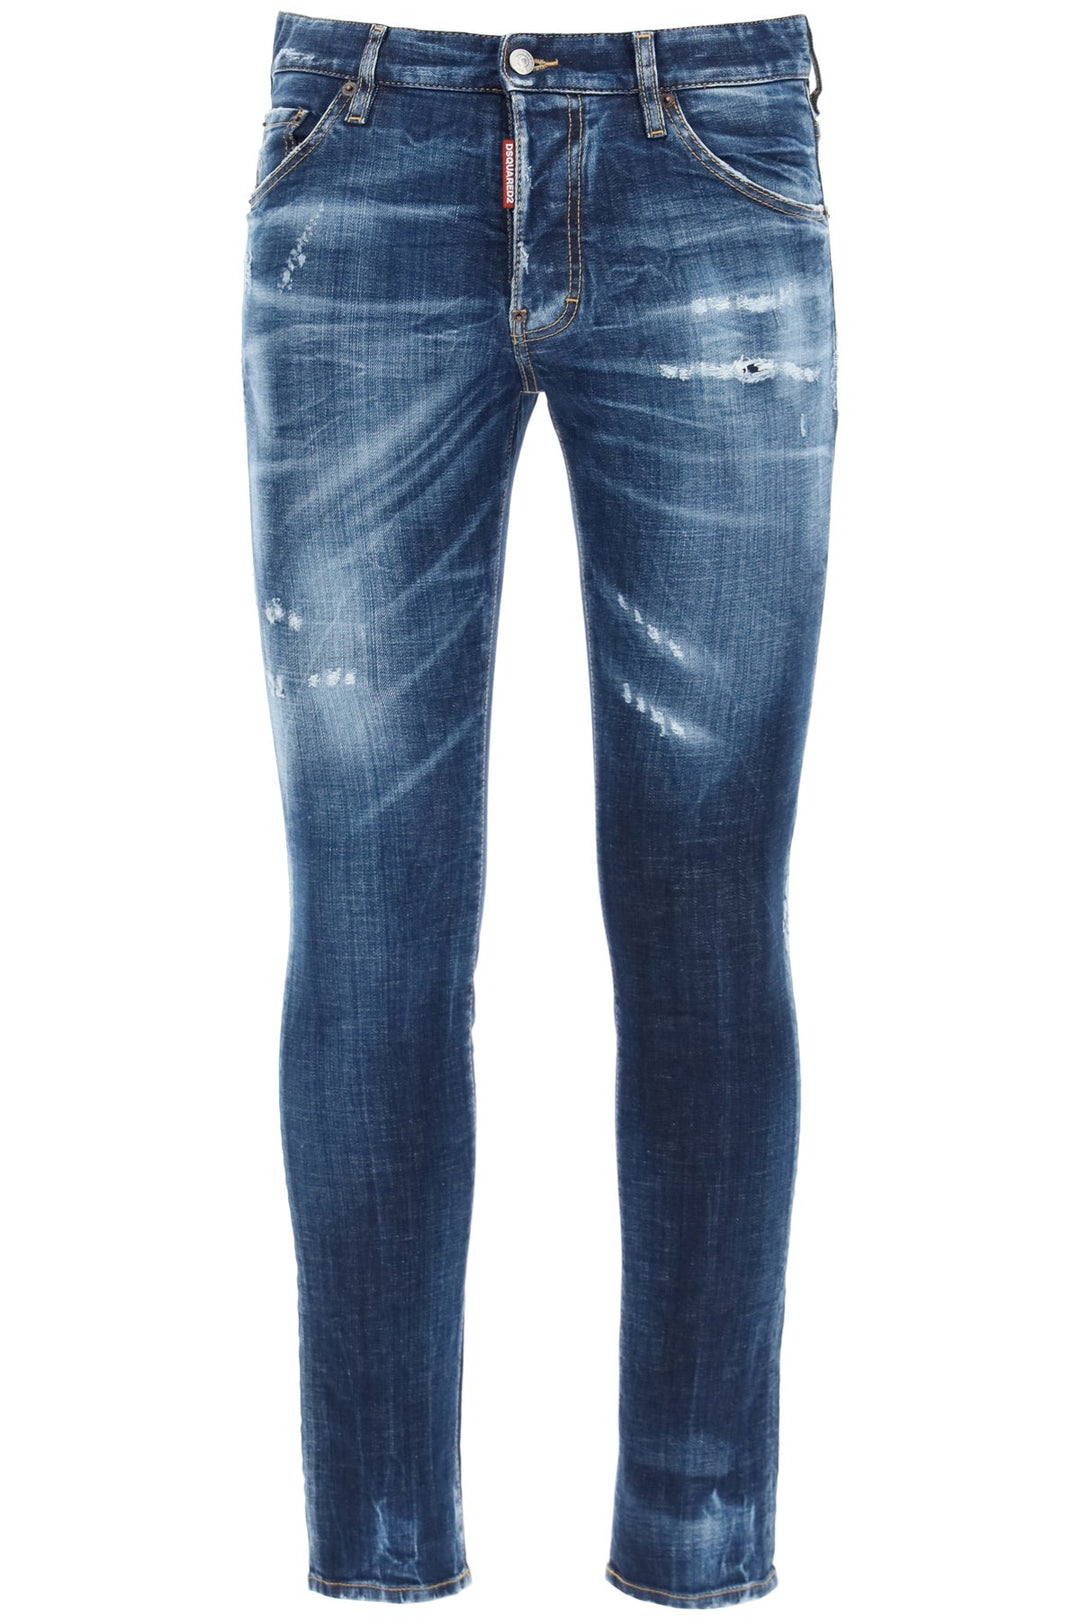 Jeans Cool Guy Stampa Logo Pocket - Dsquared2 - Uomo